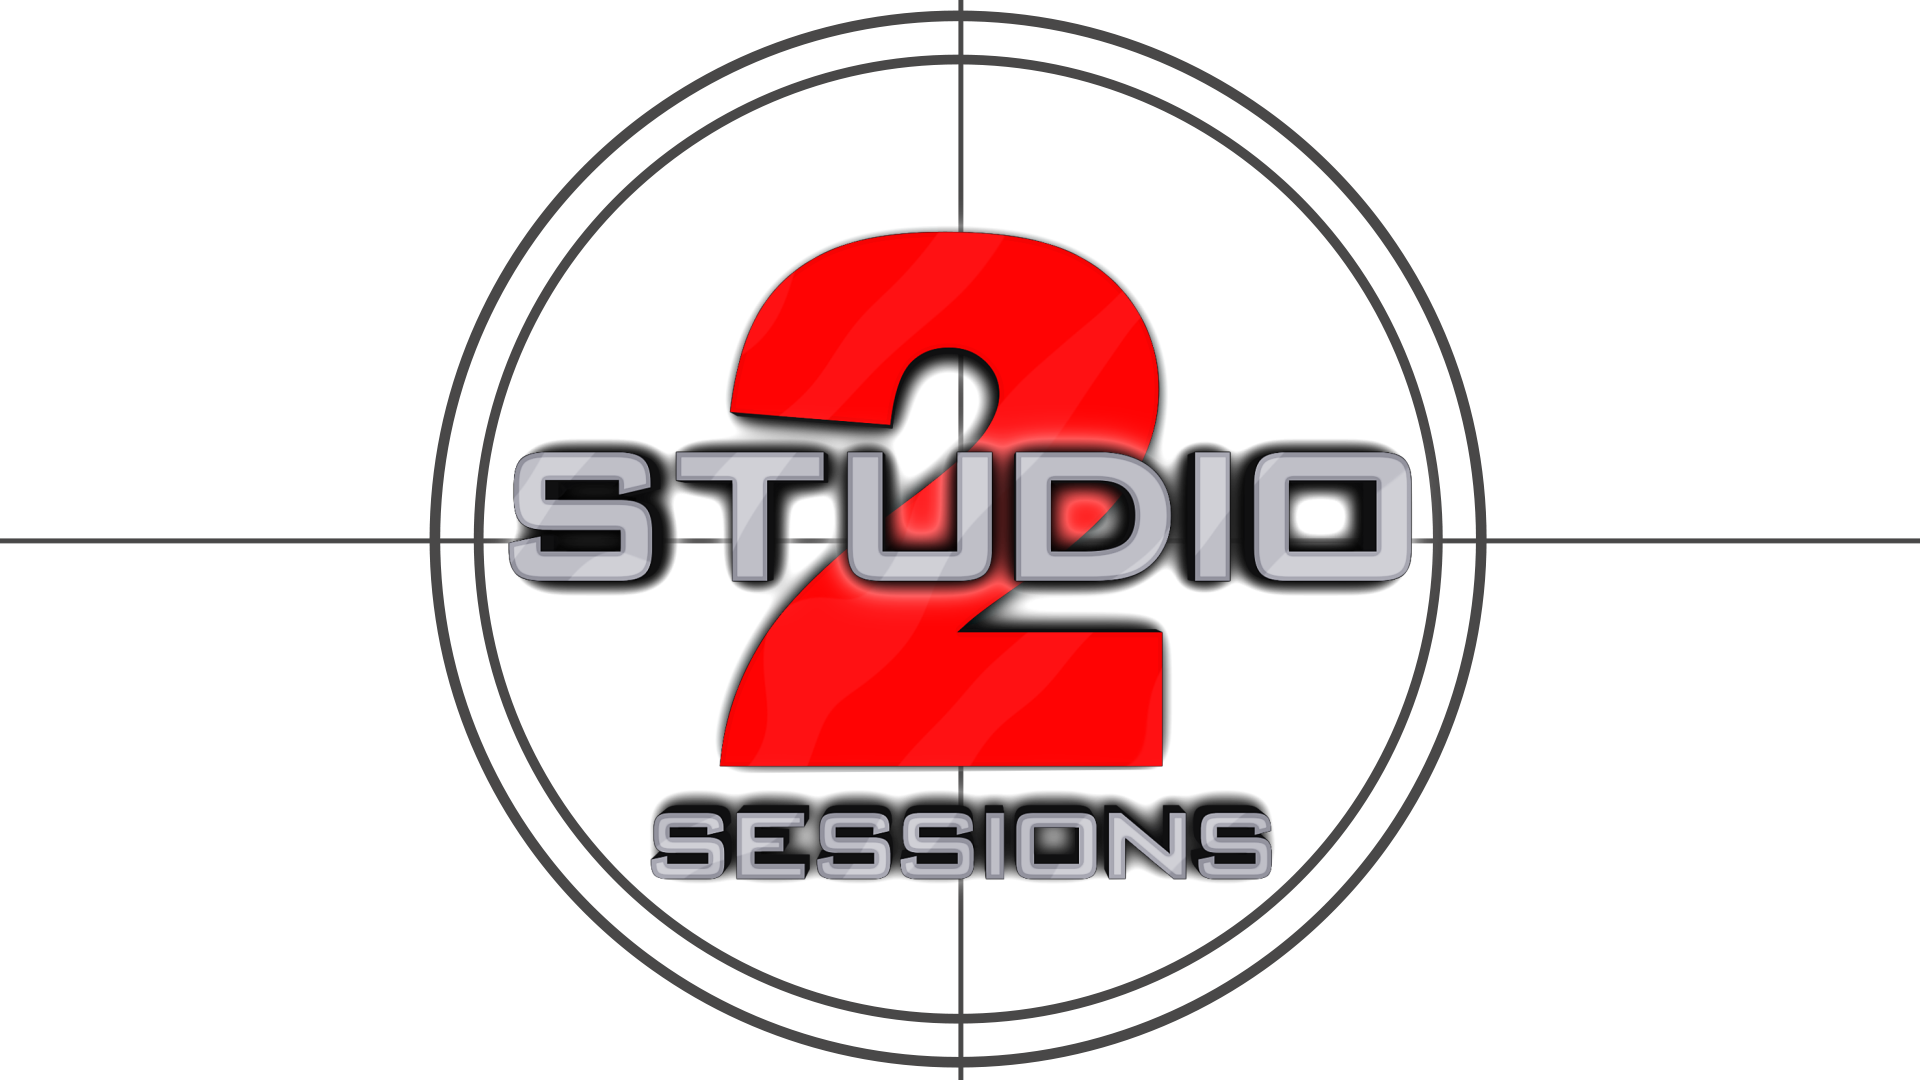 Studio2 Westefx Services